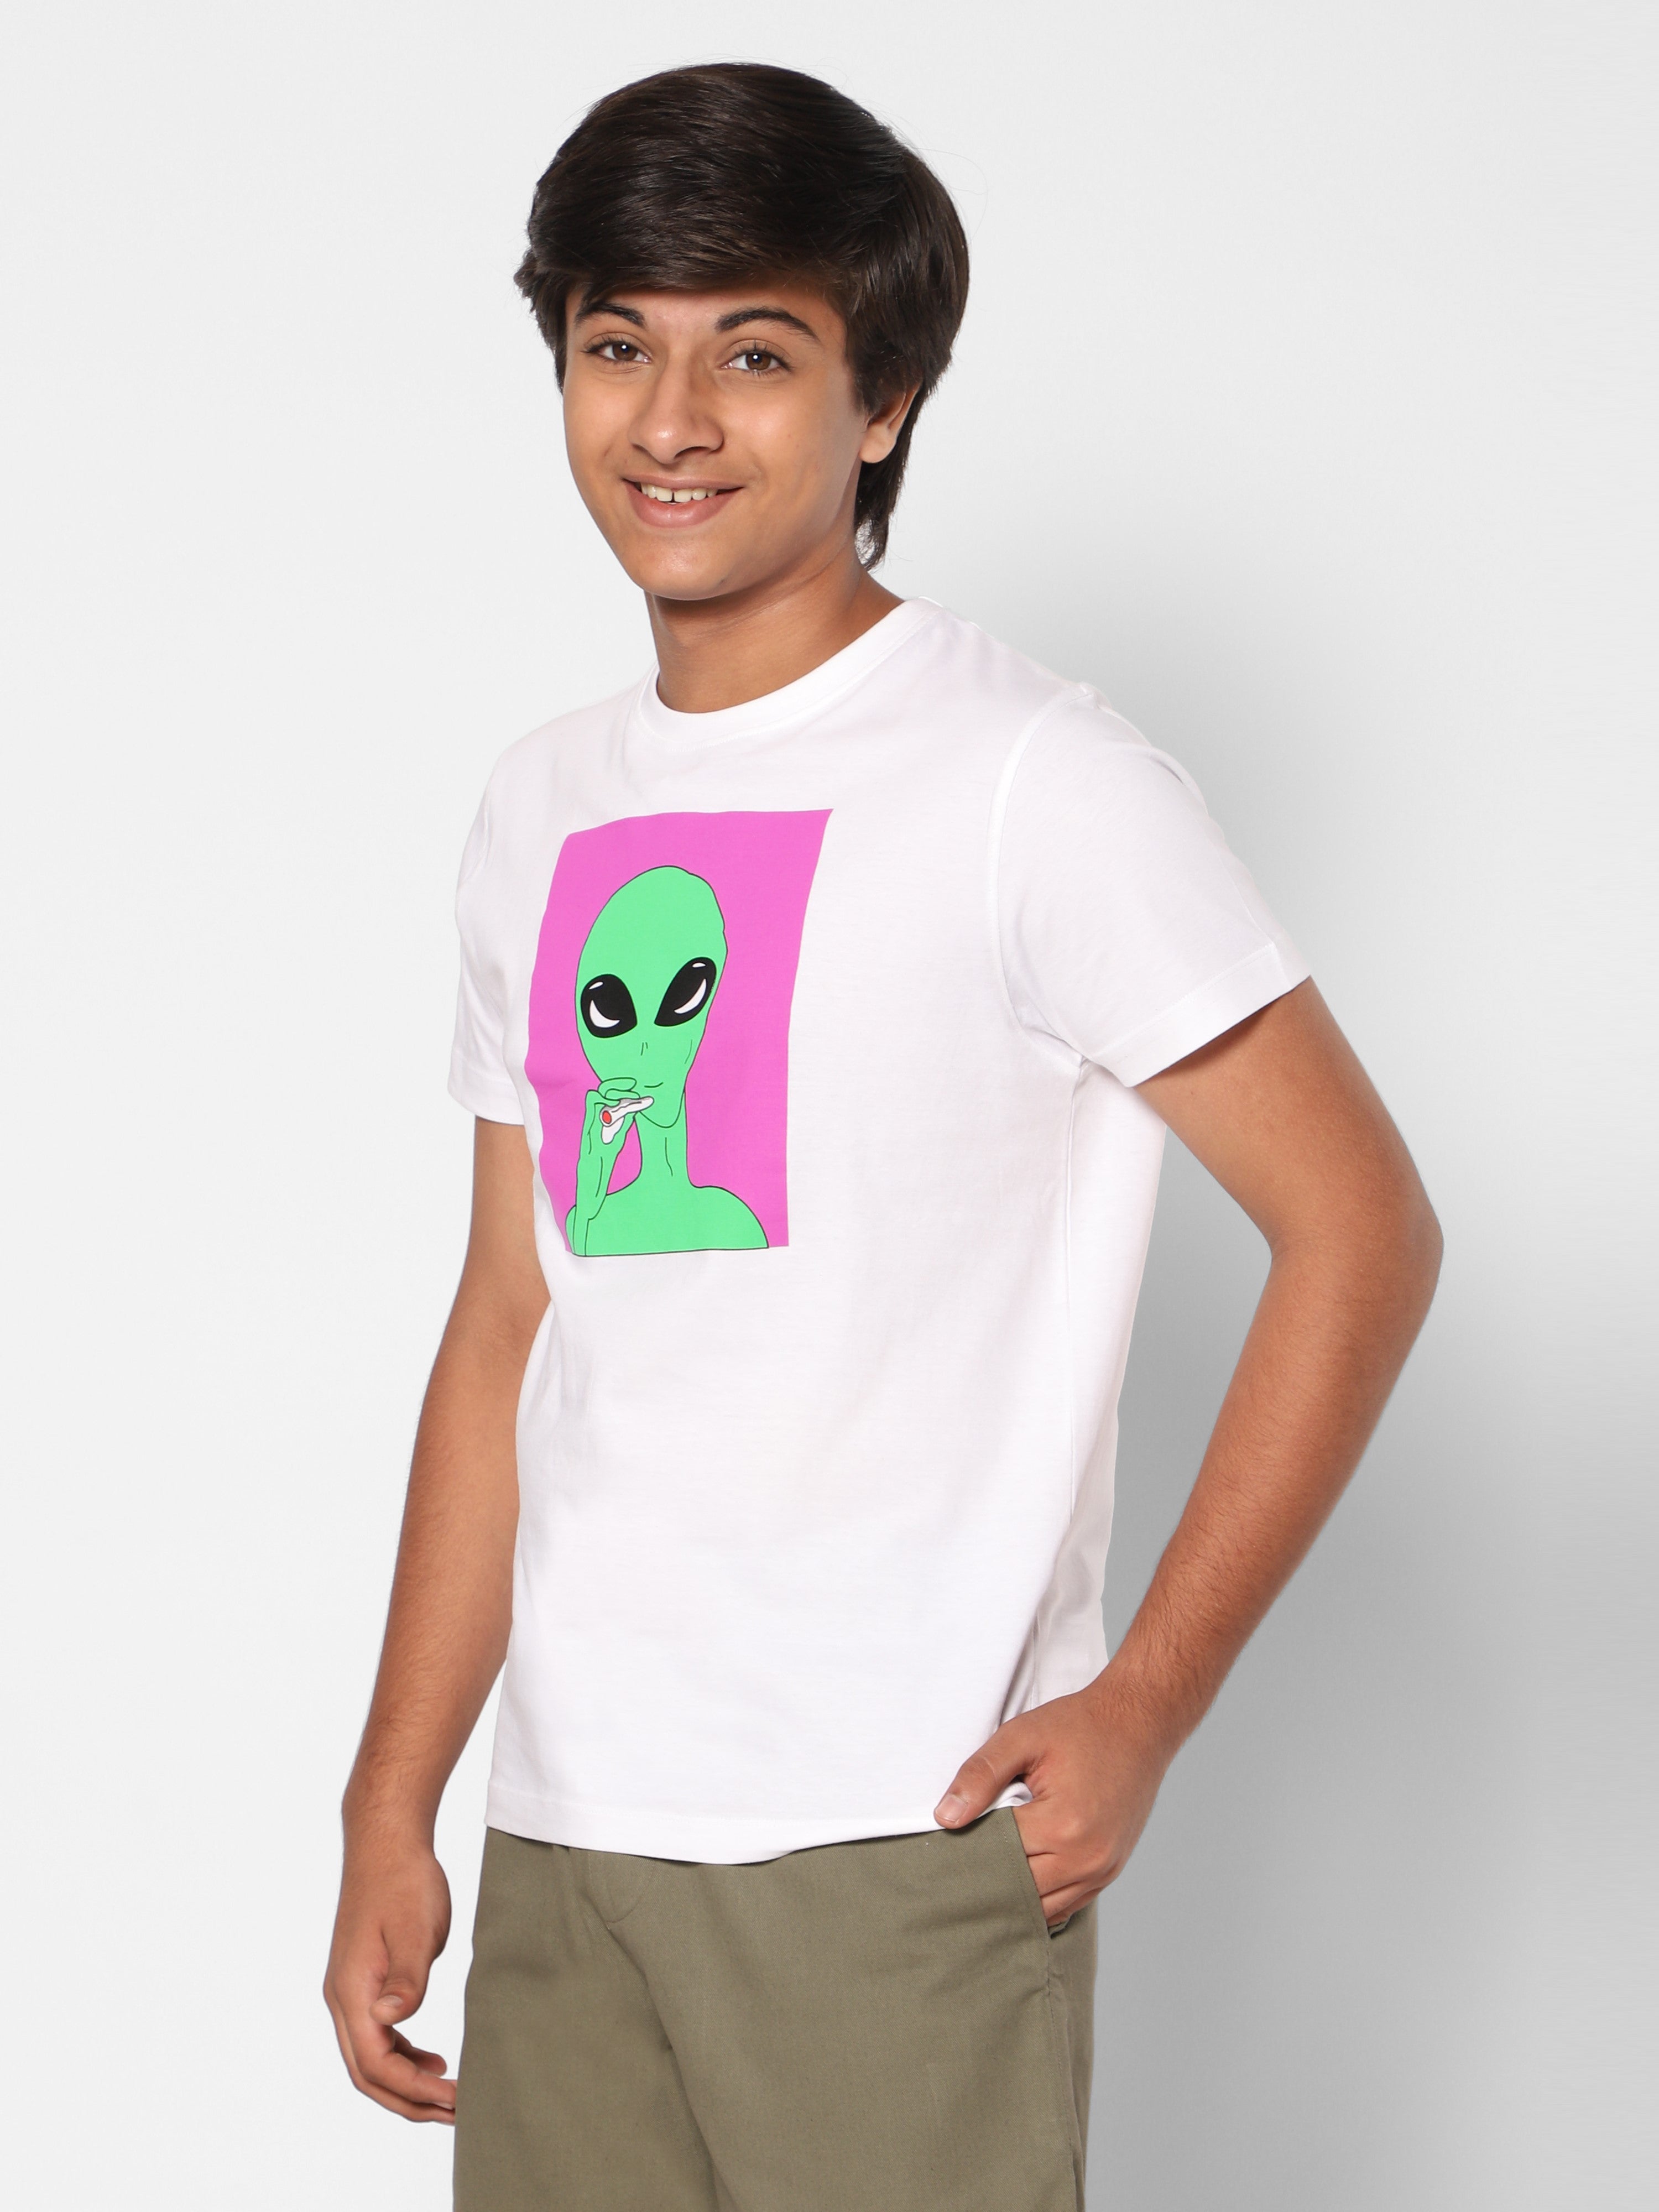 TeenTrums Unisex Graphic T-shirt- Alien Art -White